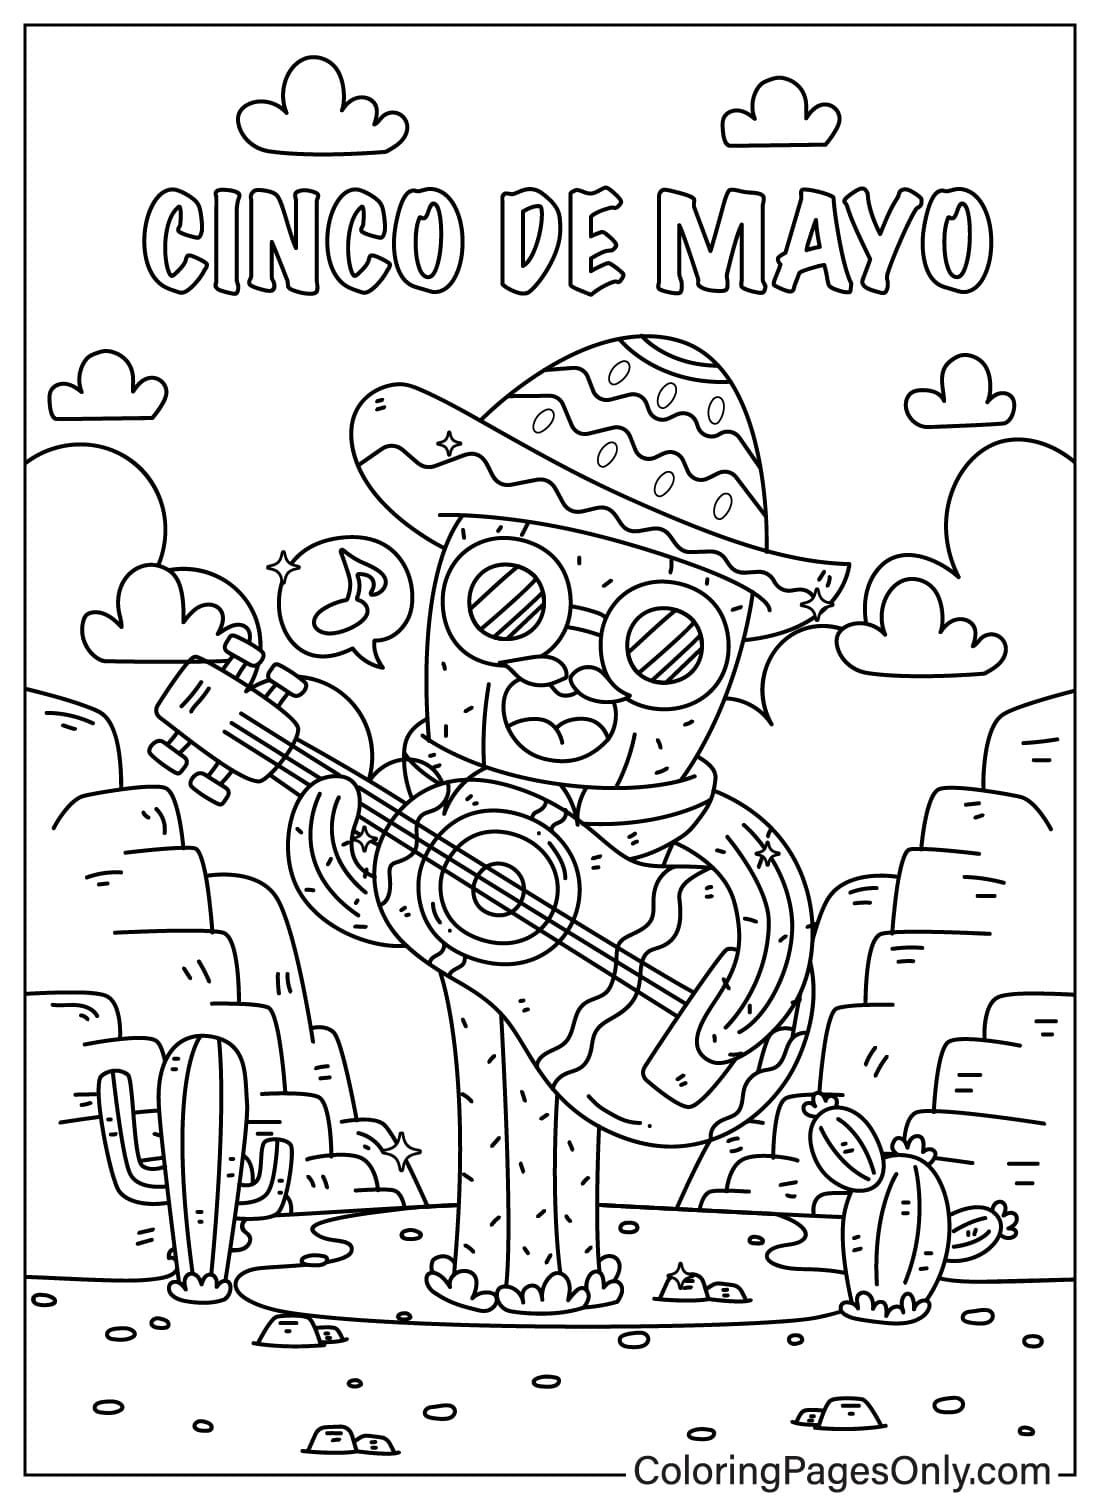 Cinco De Mayo Il Cactus suona cantando da Cinco De Mayo